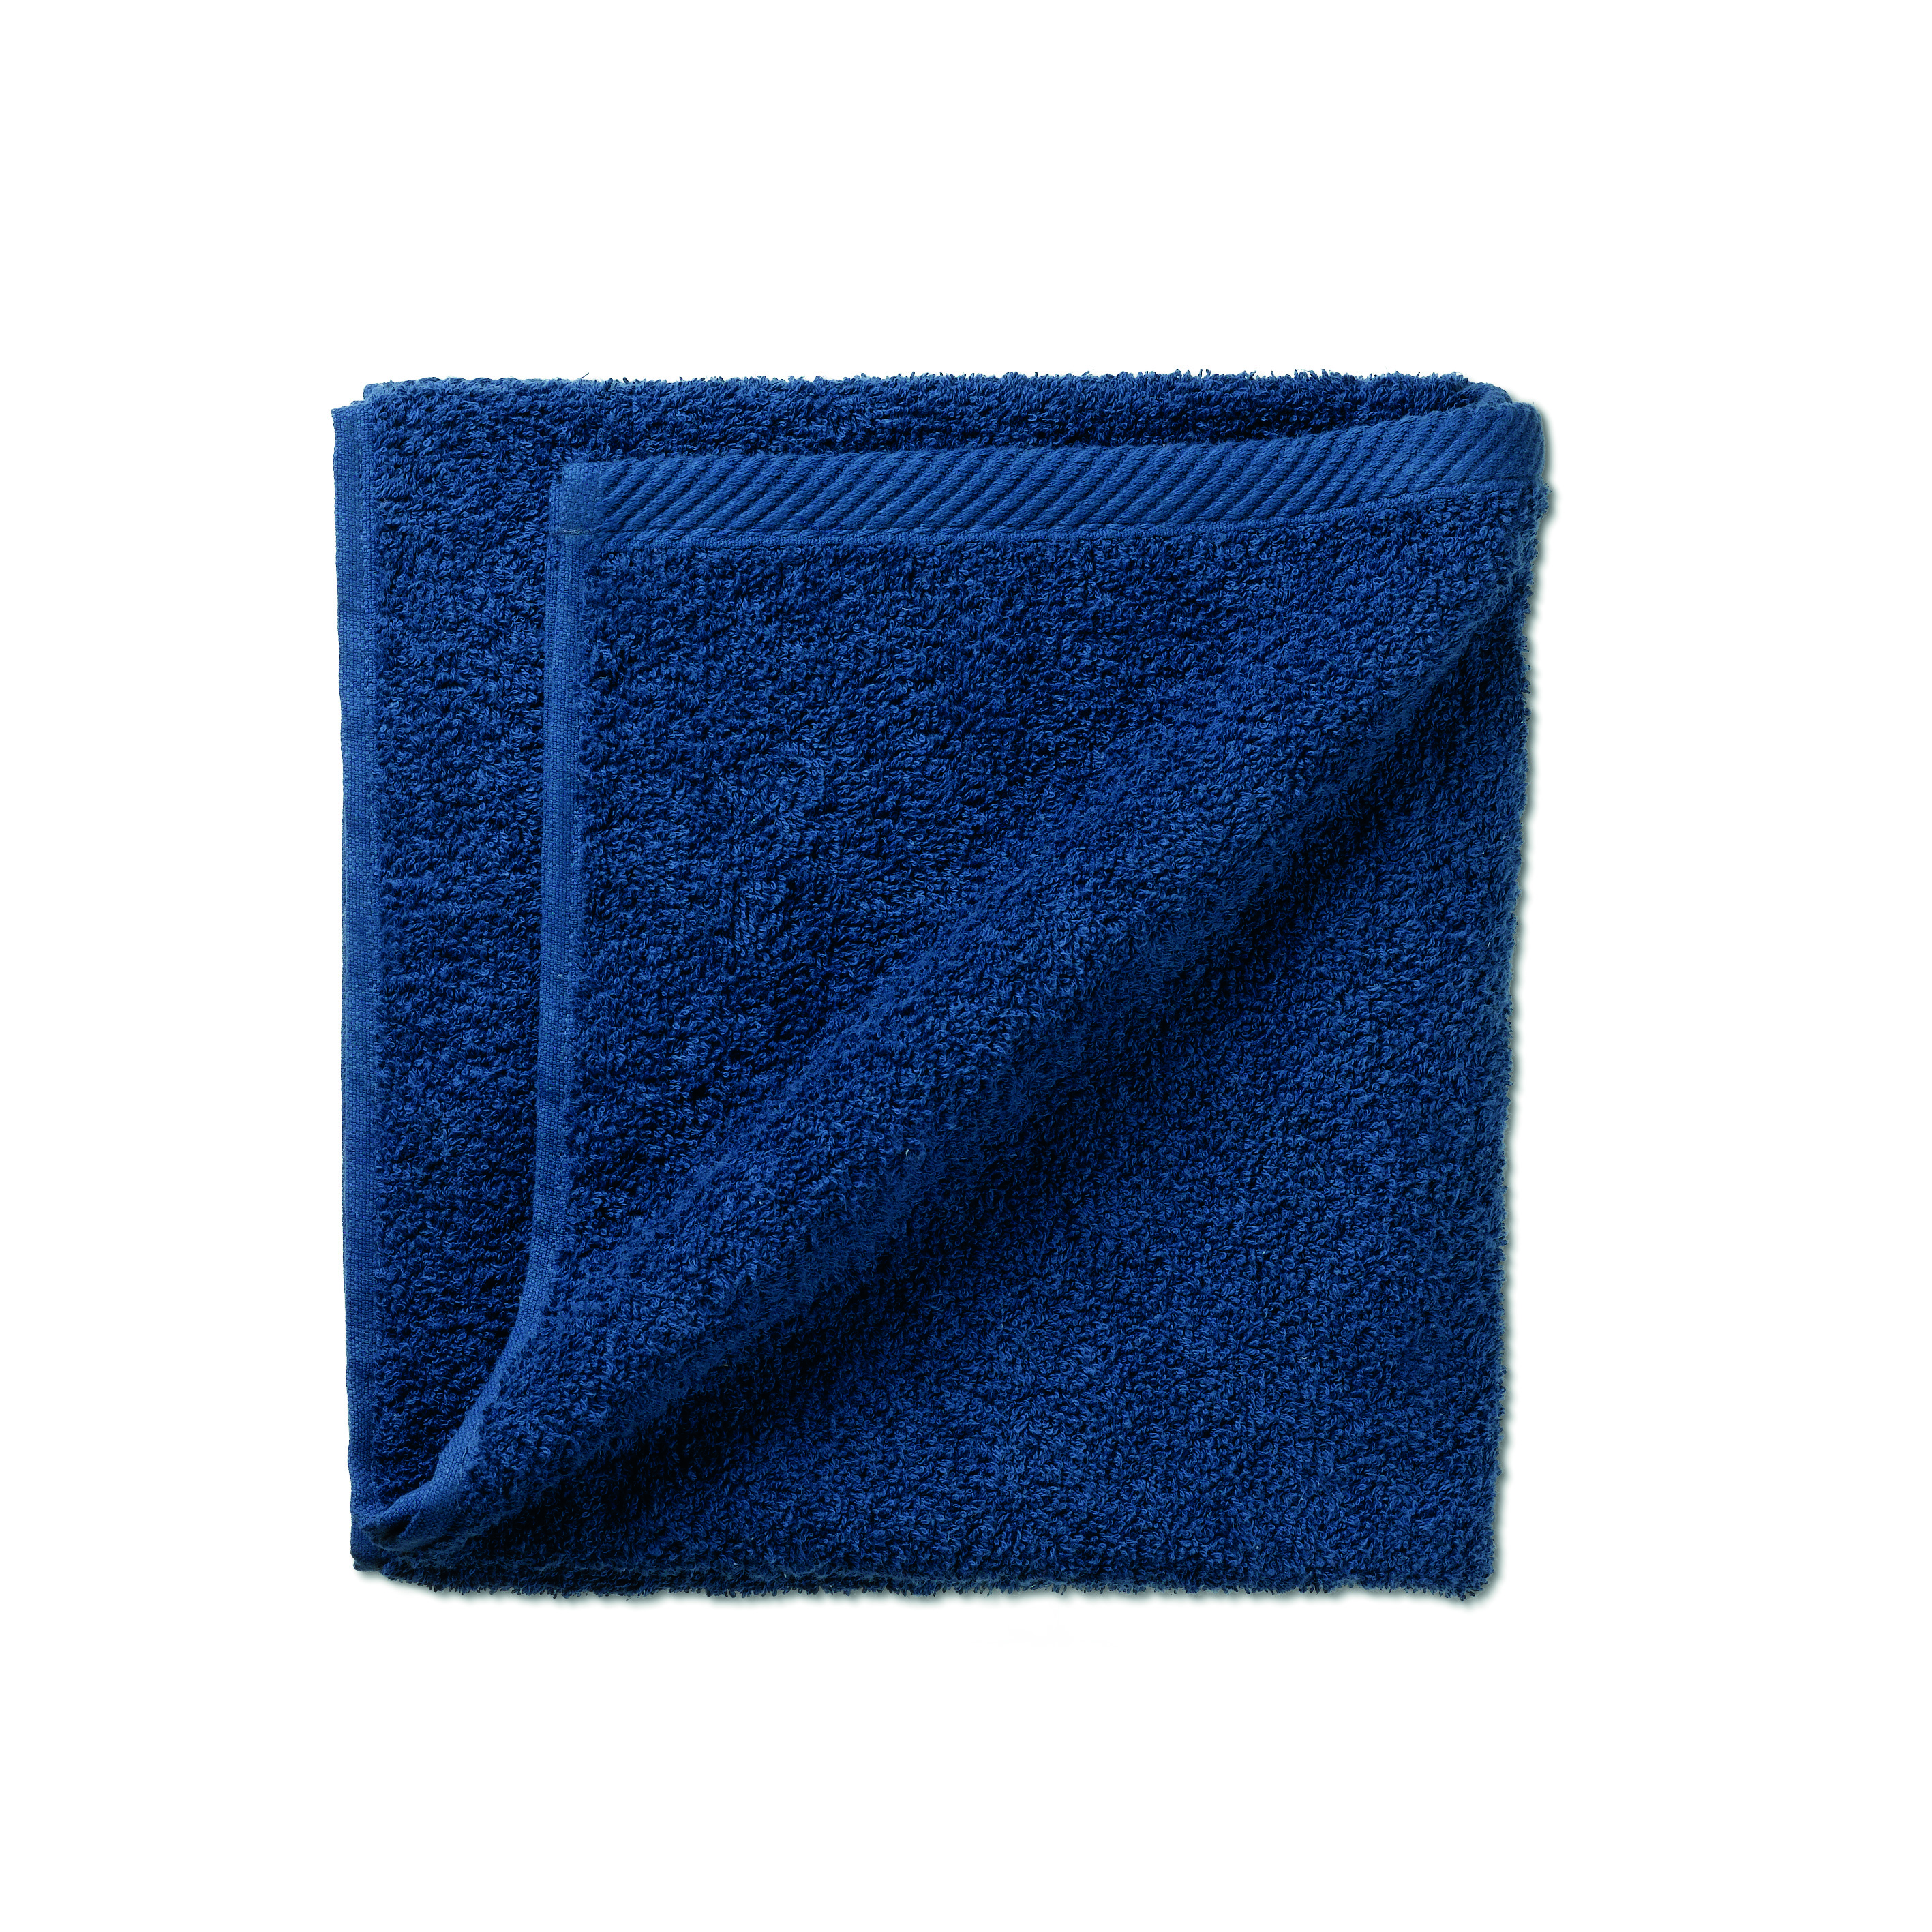 Handtuch malvenblau LADESSA